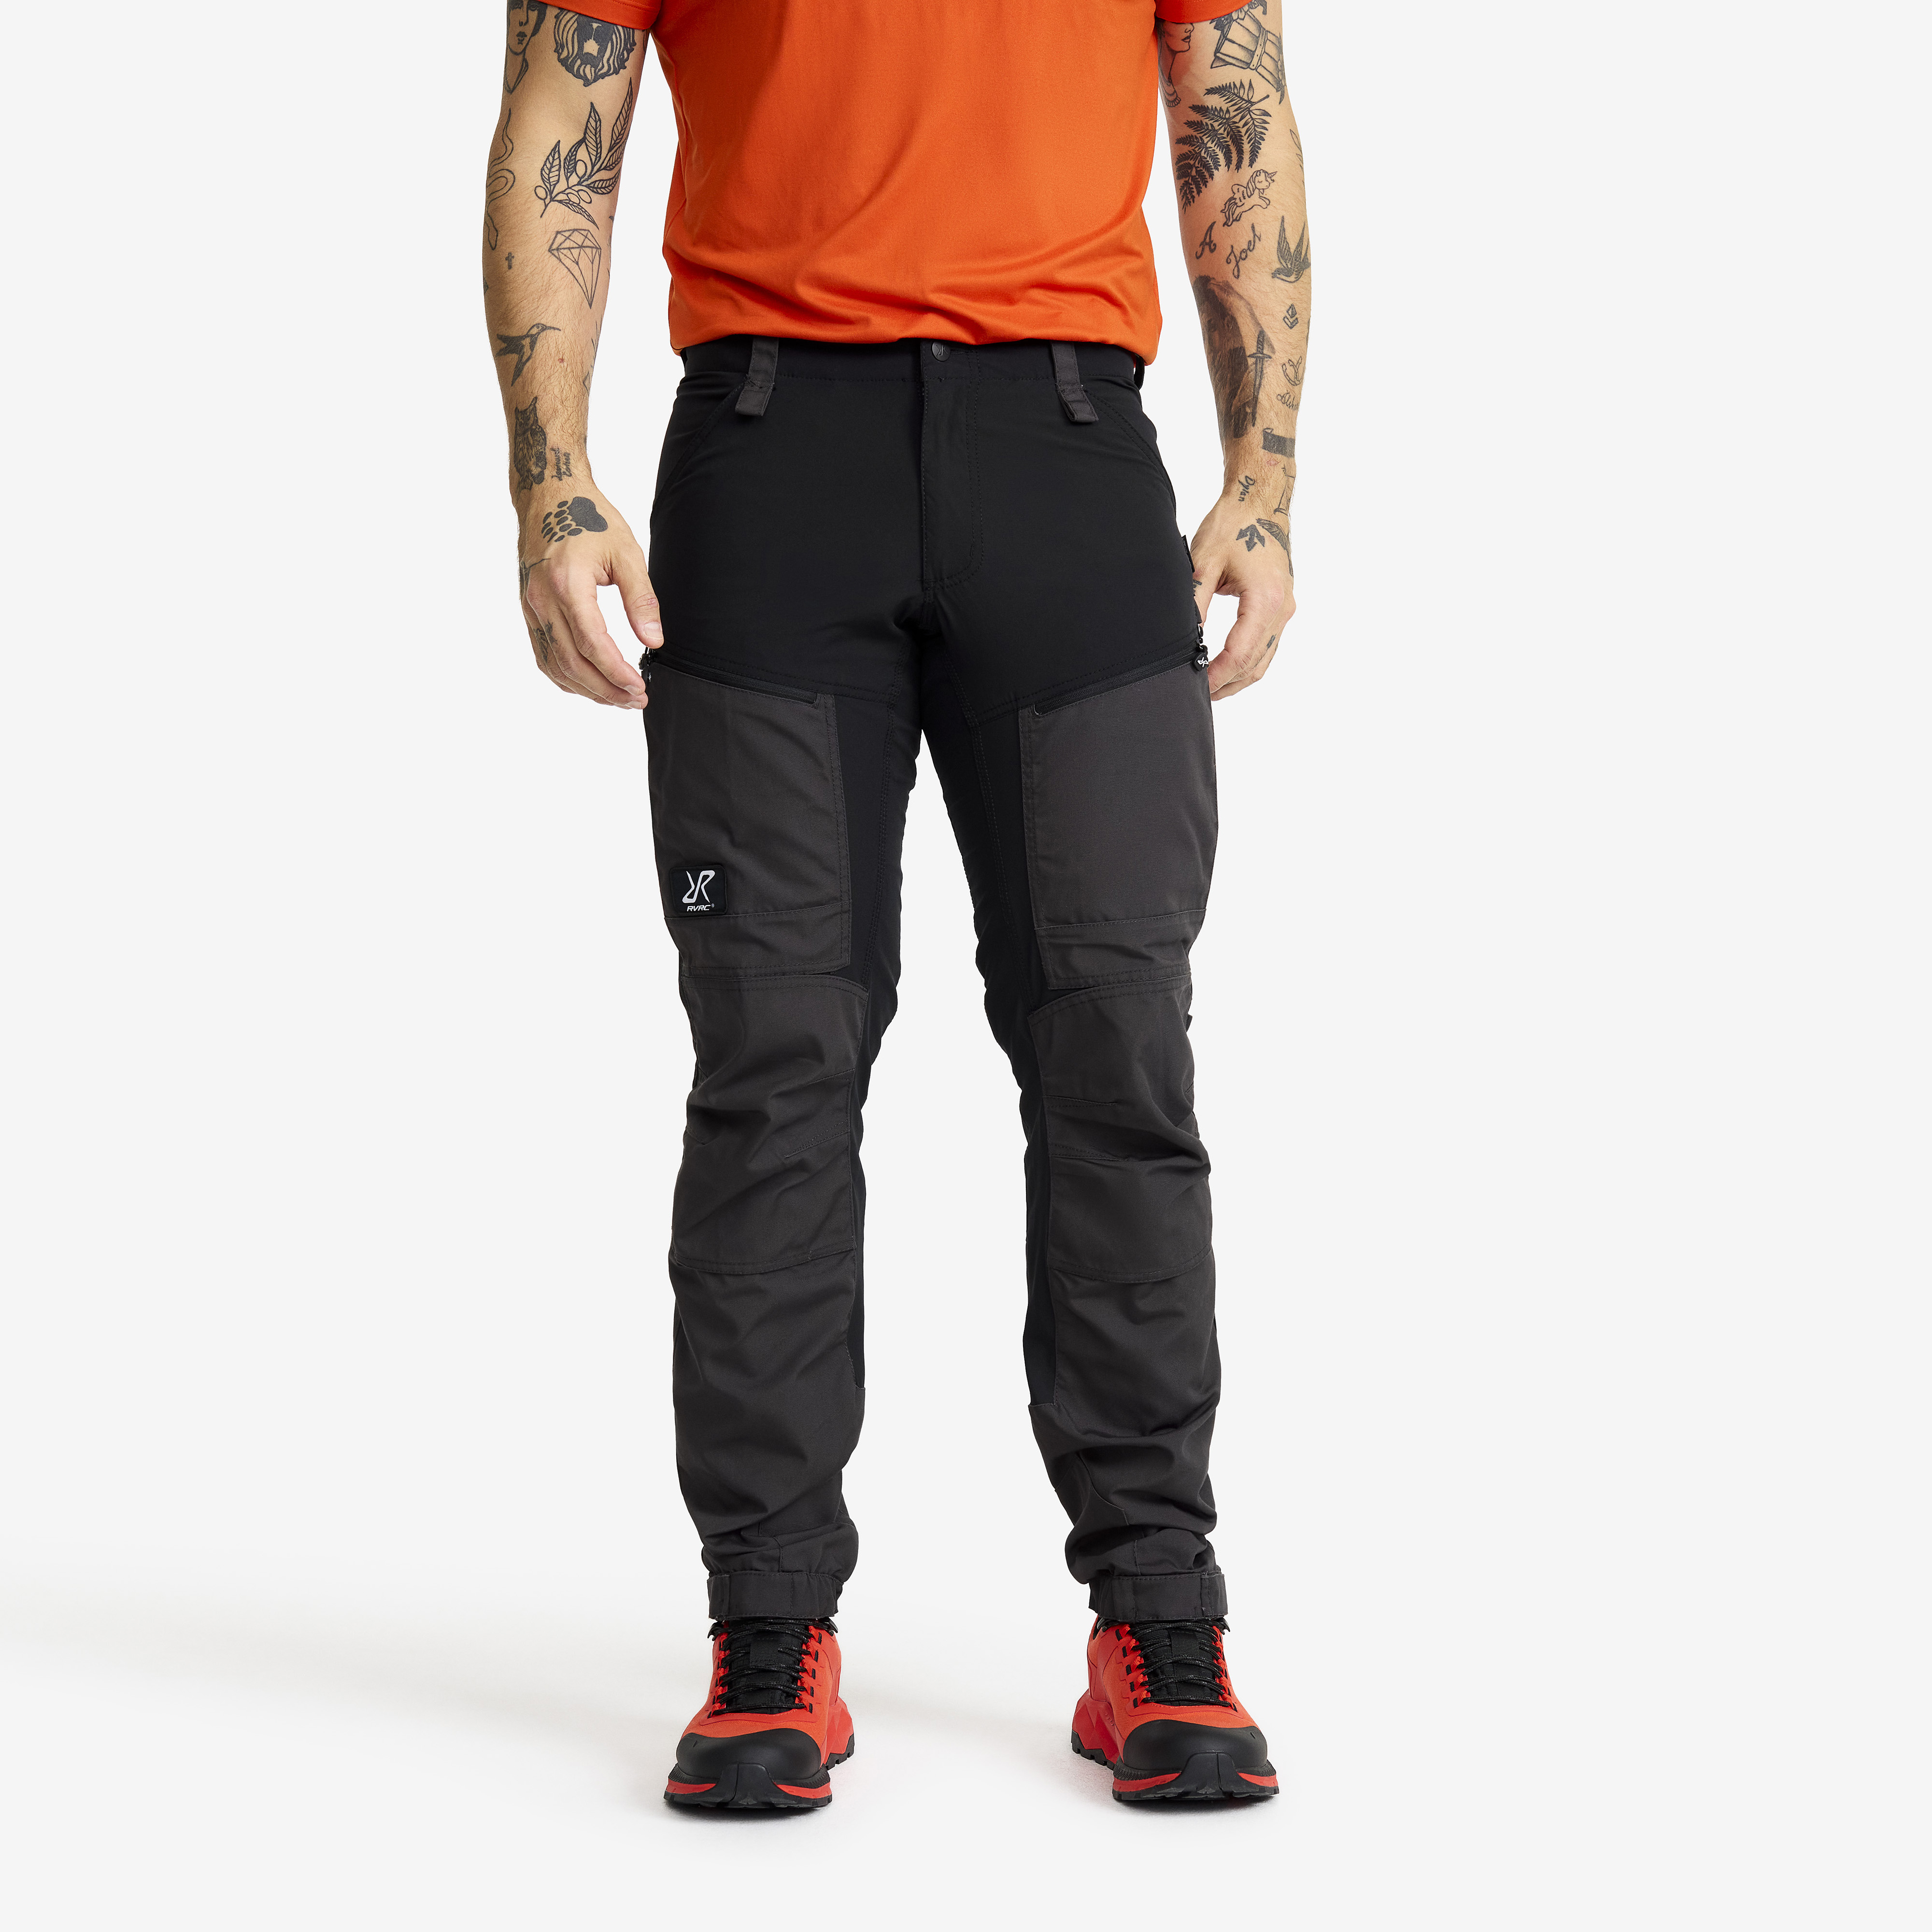 RVRC GP Pro hiking trousers for men in black